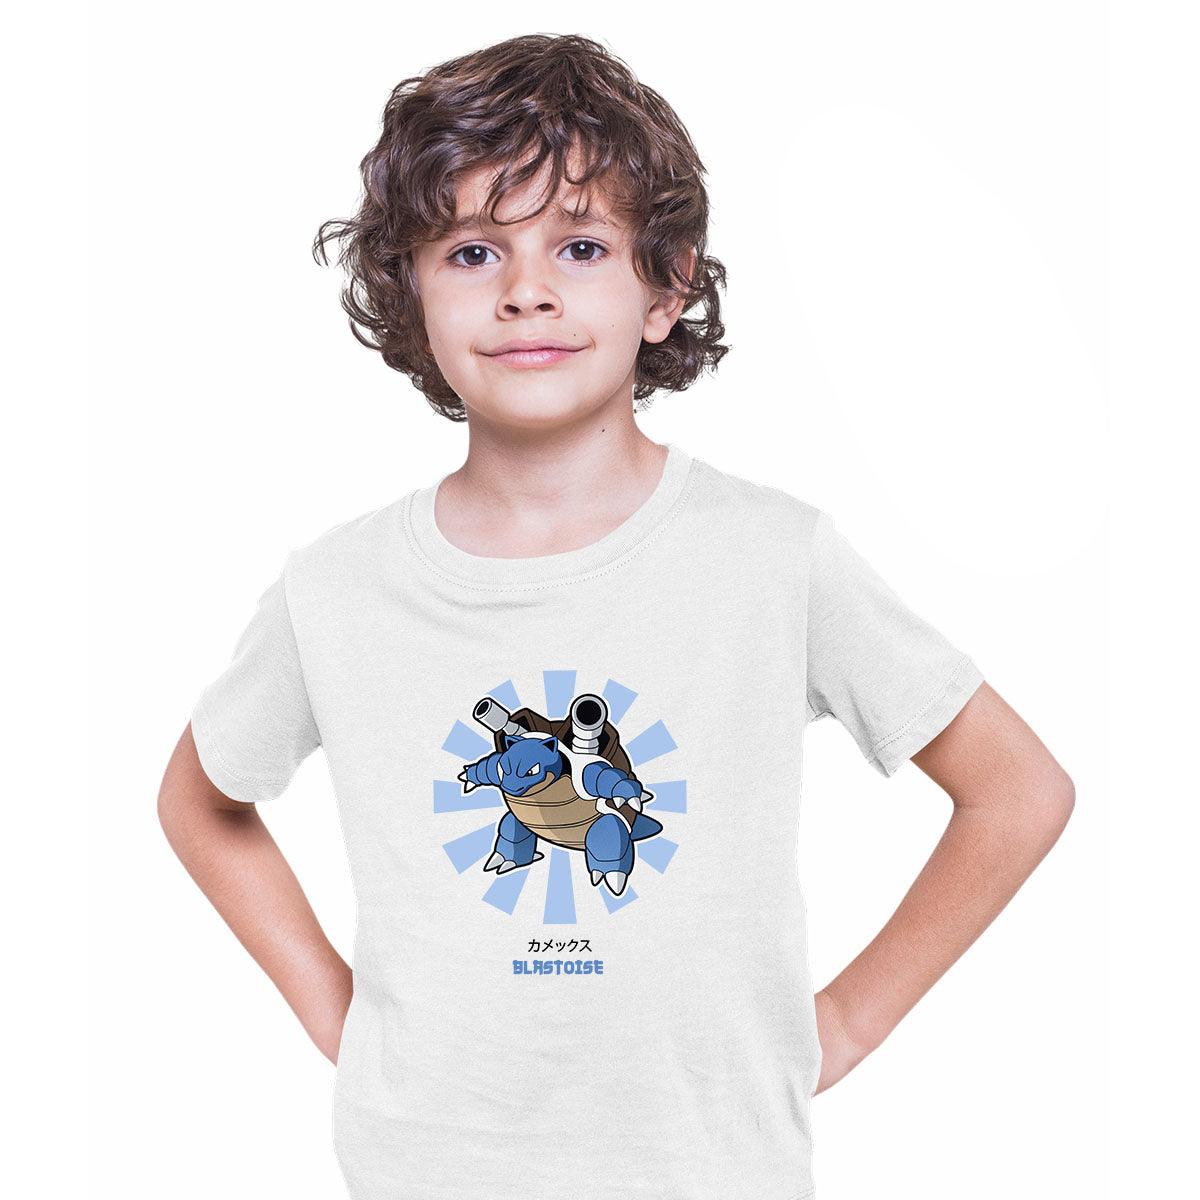 Blastoise Pokemon Movie Typography T-shirt for Kids - Kuzi Tees